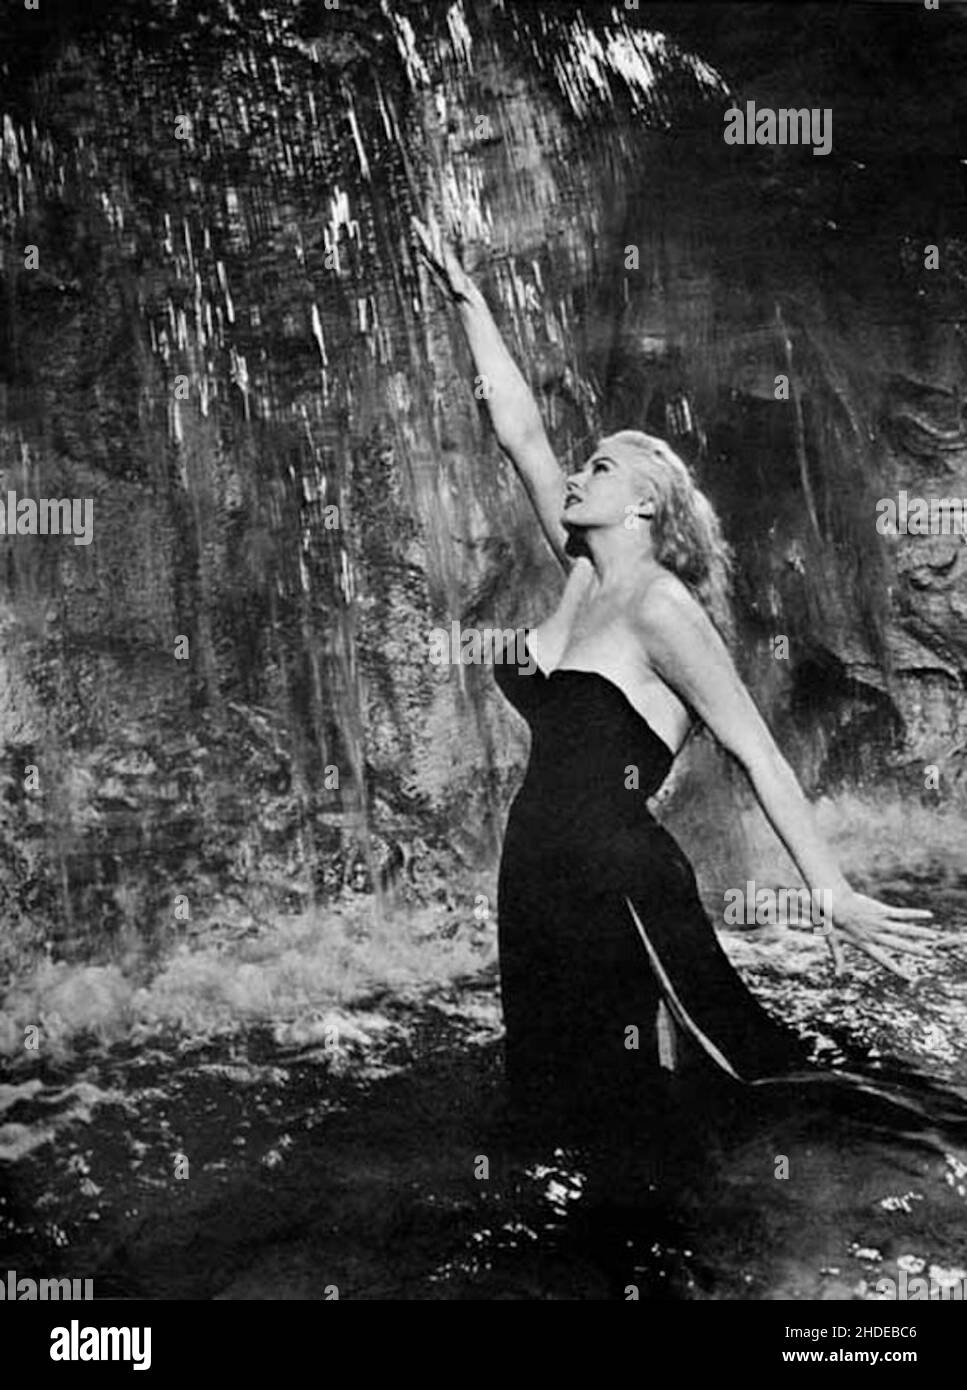 Anita Ekberg in the famous iconic Trevi Fountain scene from the film La  Dolce Vita - The Sweet Life by Italian film director Frederico Fellini  Stock Photo - Alamy